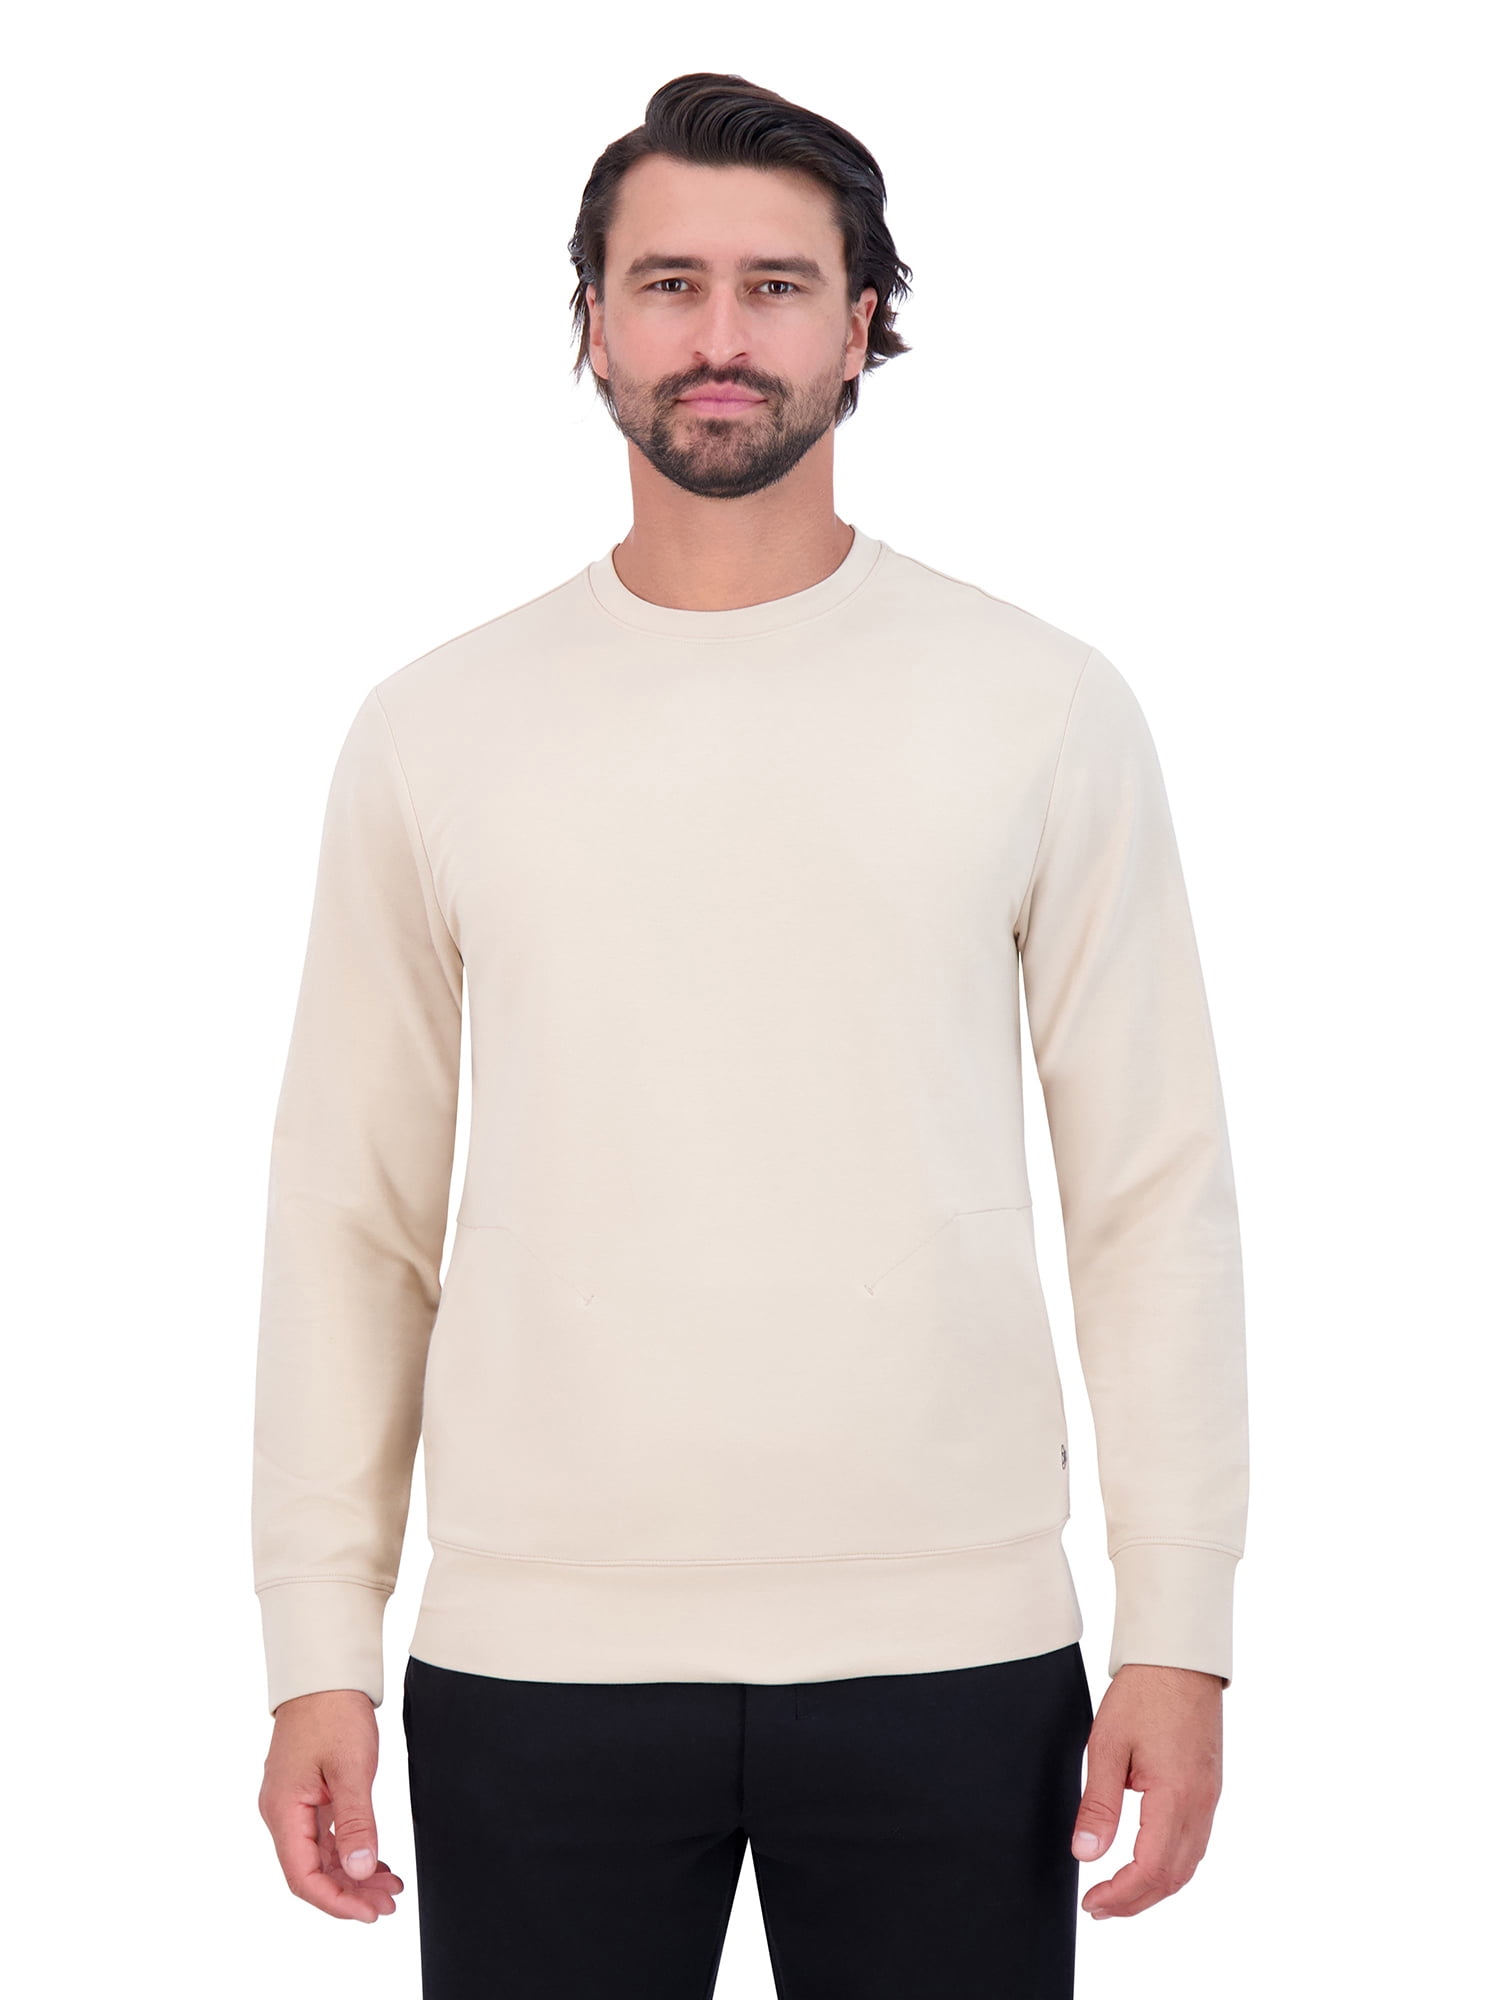 Gaiam Men's Namaste Crew Sweatshirt, Sizes S-XL